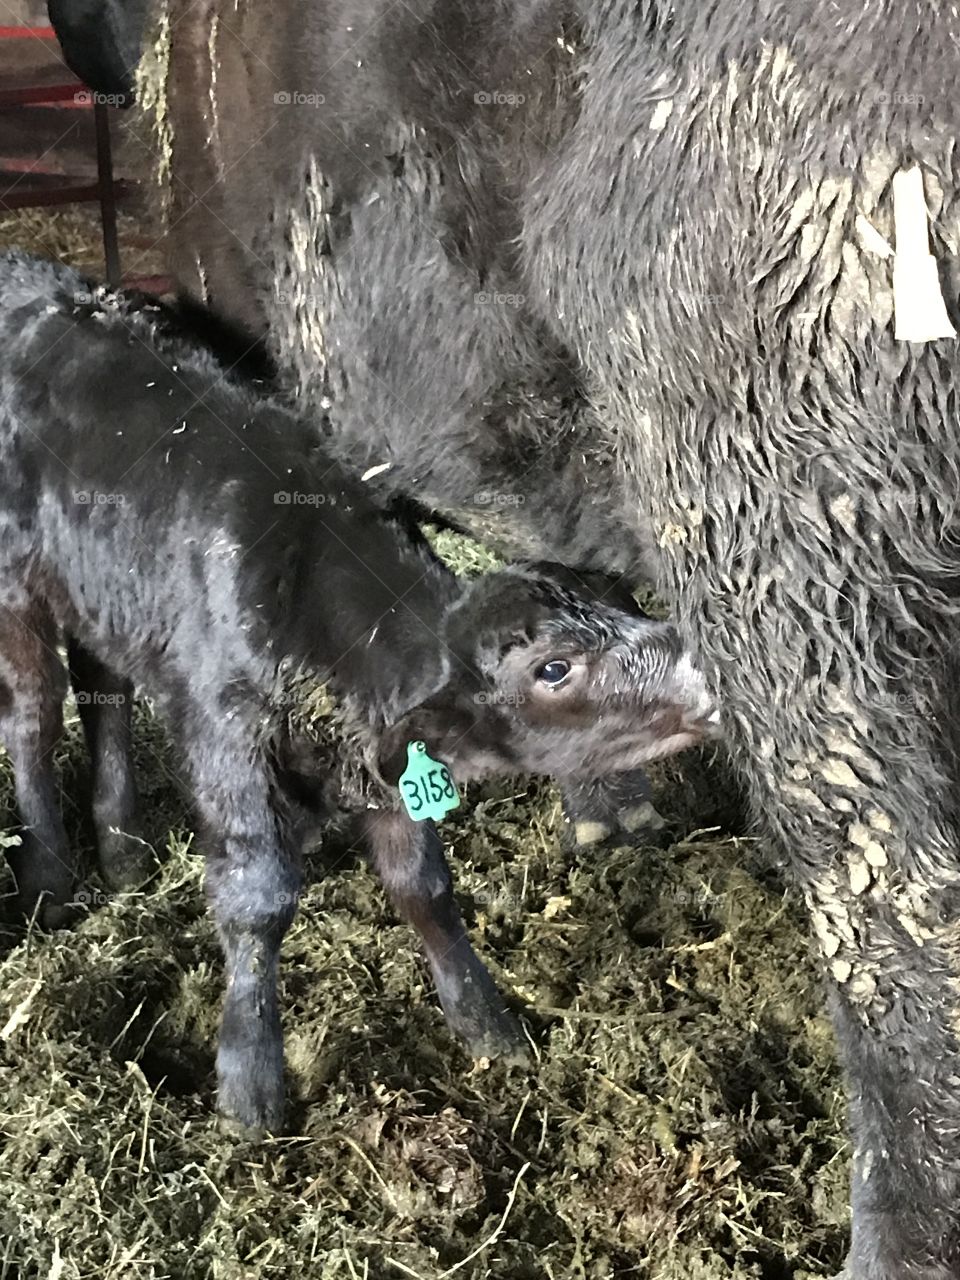 Bevy calf drinking from its Mom. Spring. Calving season